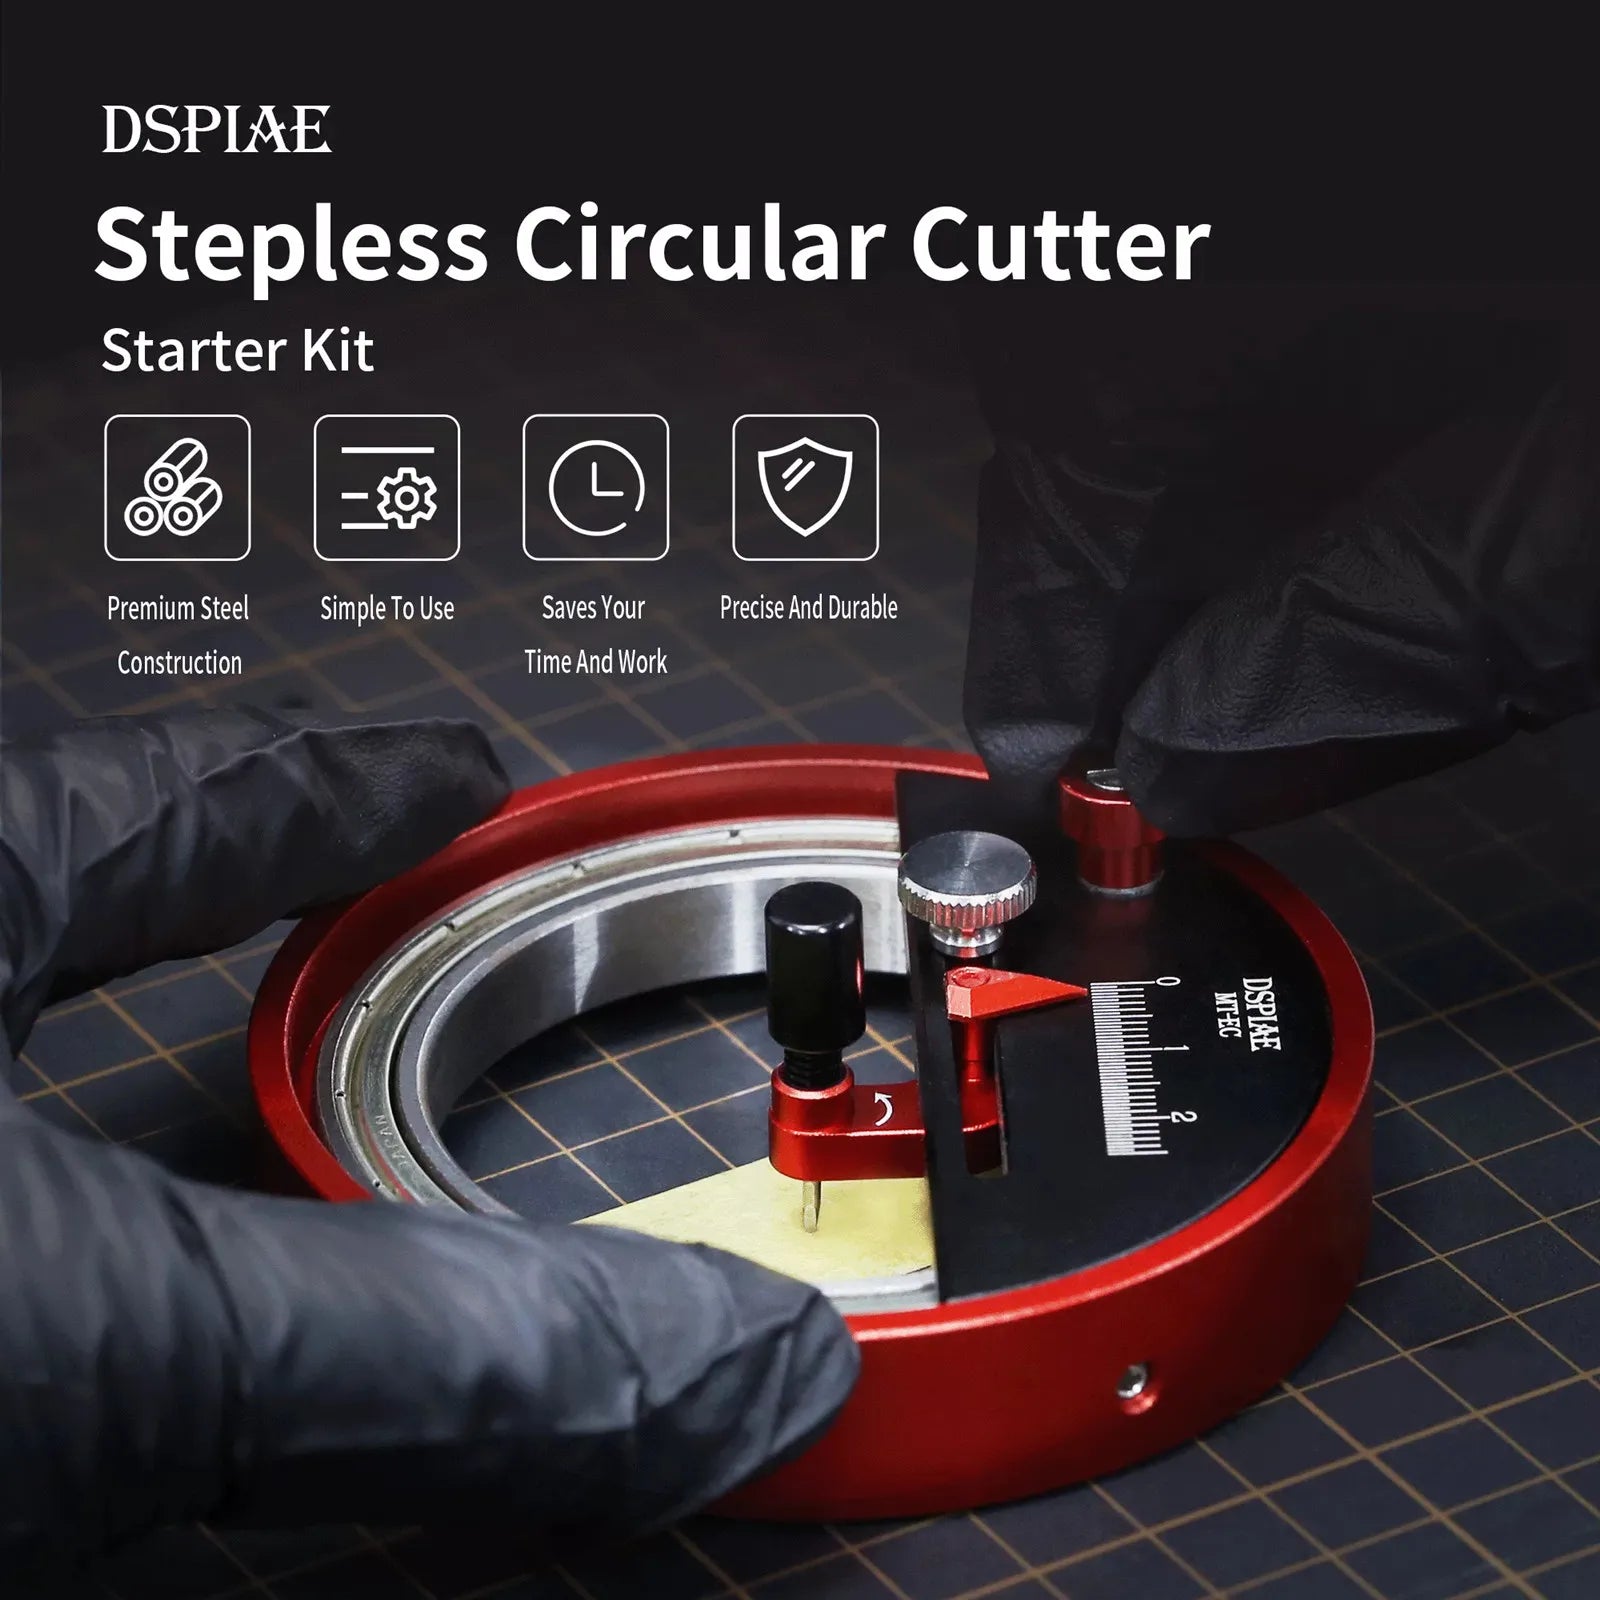 DSPIAE MT-EC Stepless Circular Cutter: Precision Crafting Starter Kit